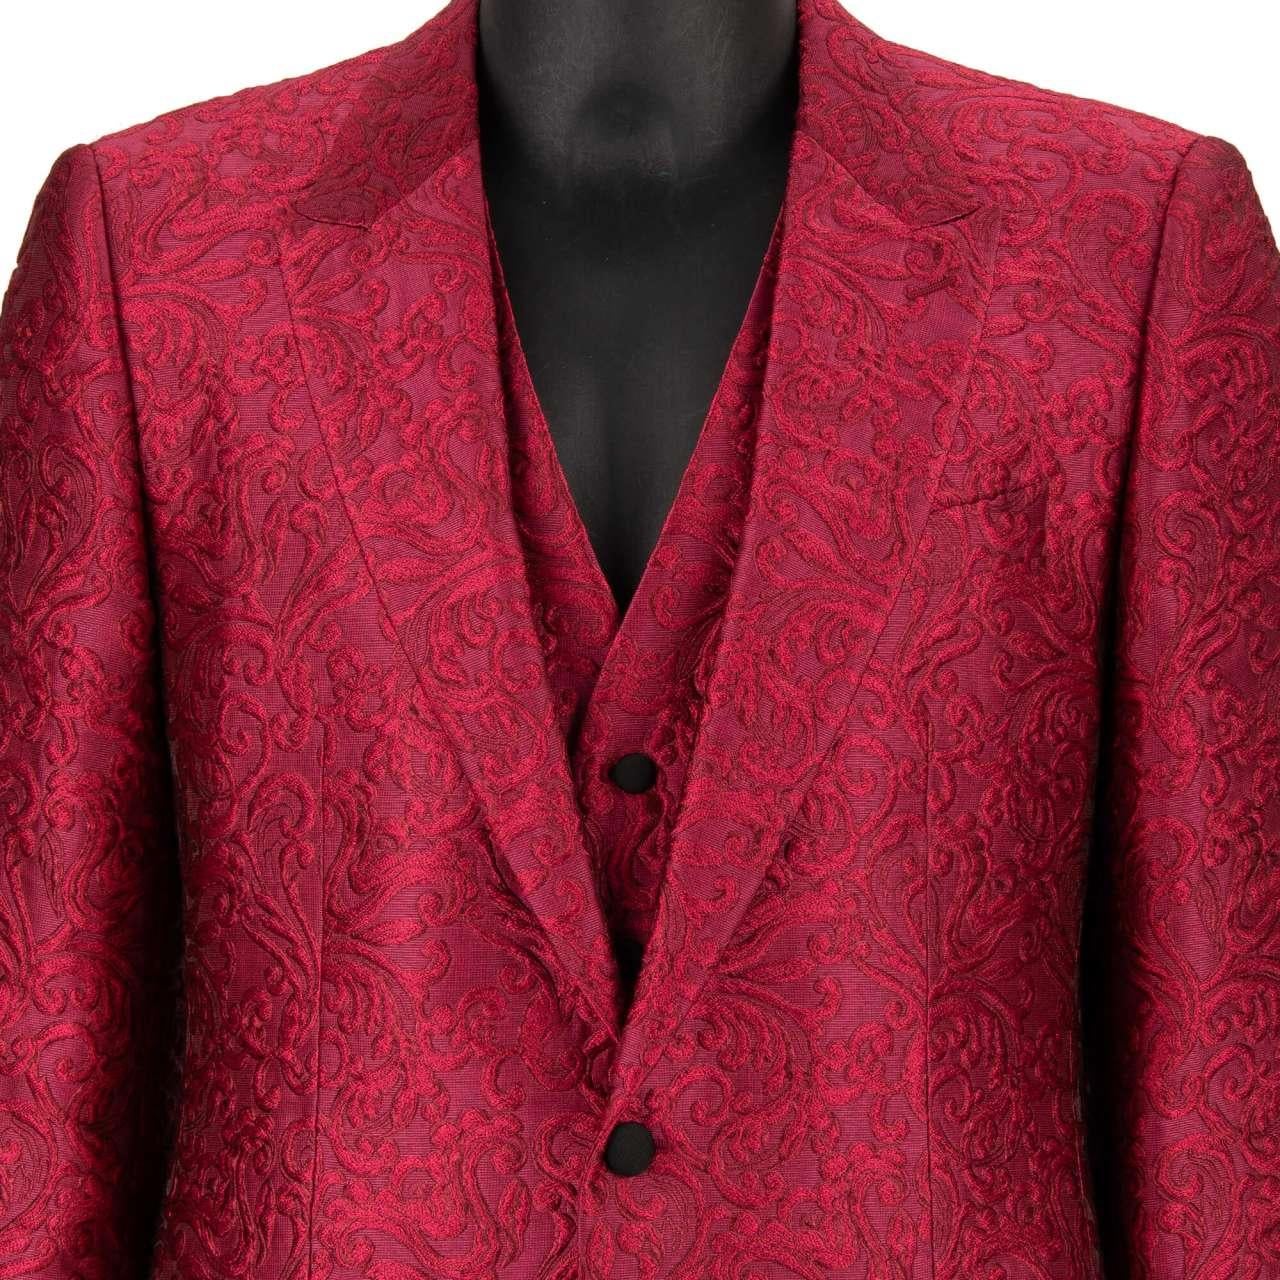 Dolce & Gabbana - Baroque 3 Piece Jacquard Suit Jacket Waistcoat SICILIA Pink 52 For Sale 4